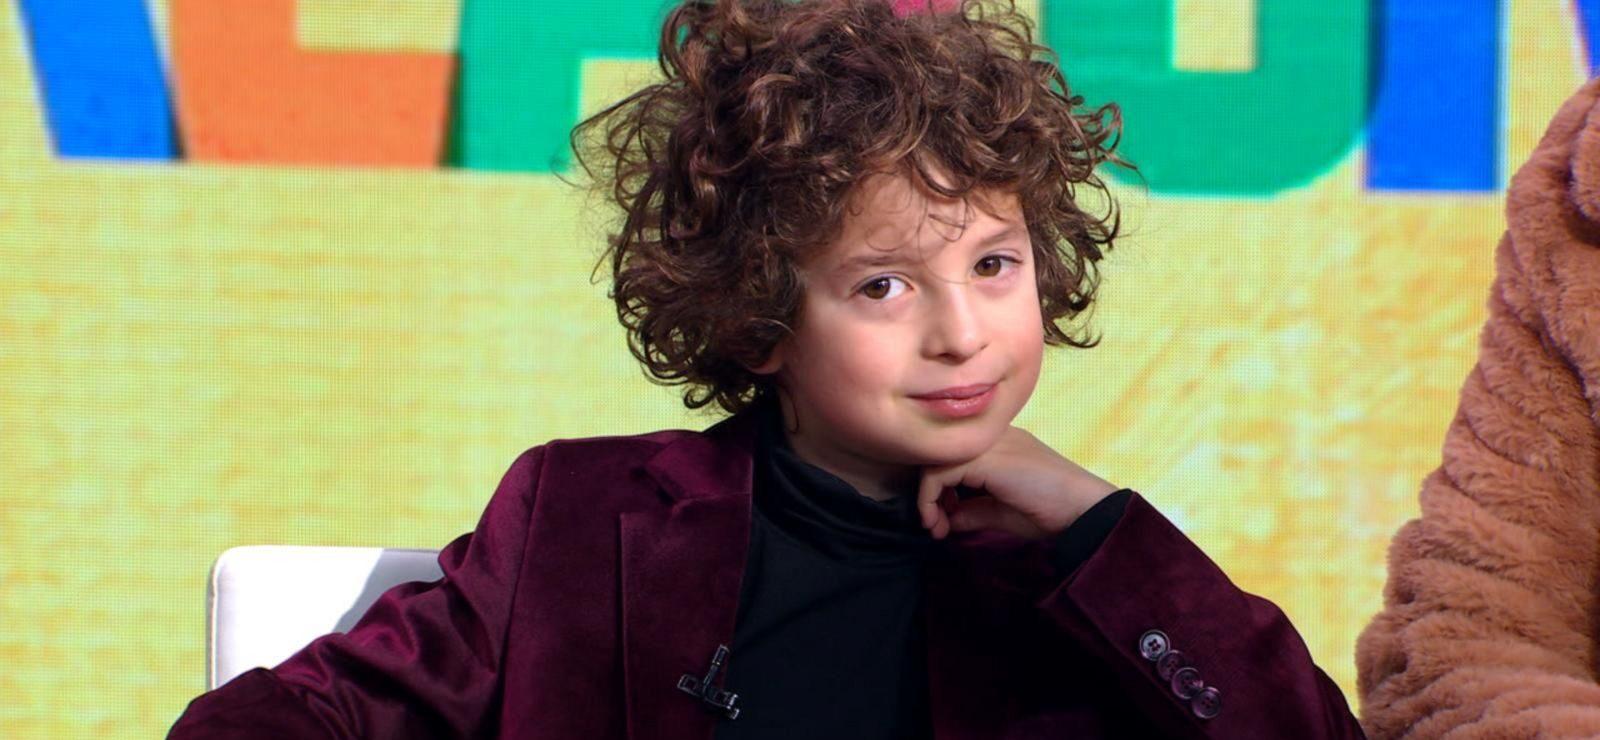 7-Year-Old Max Alexander Stitches His Way to Fashion Stardom!